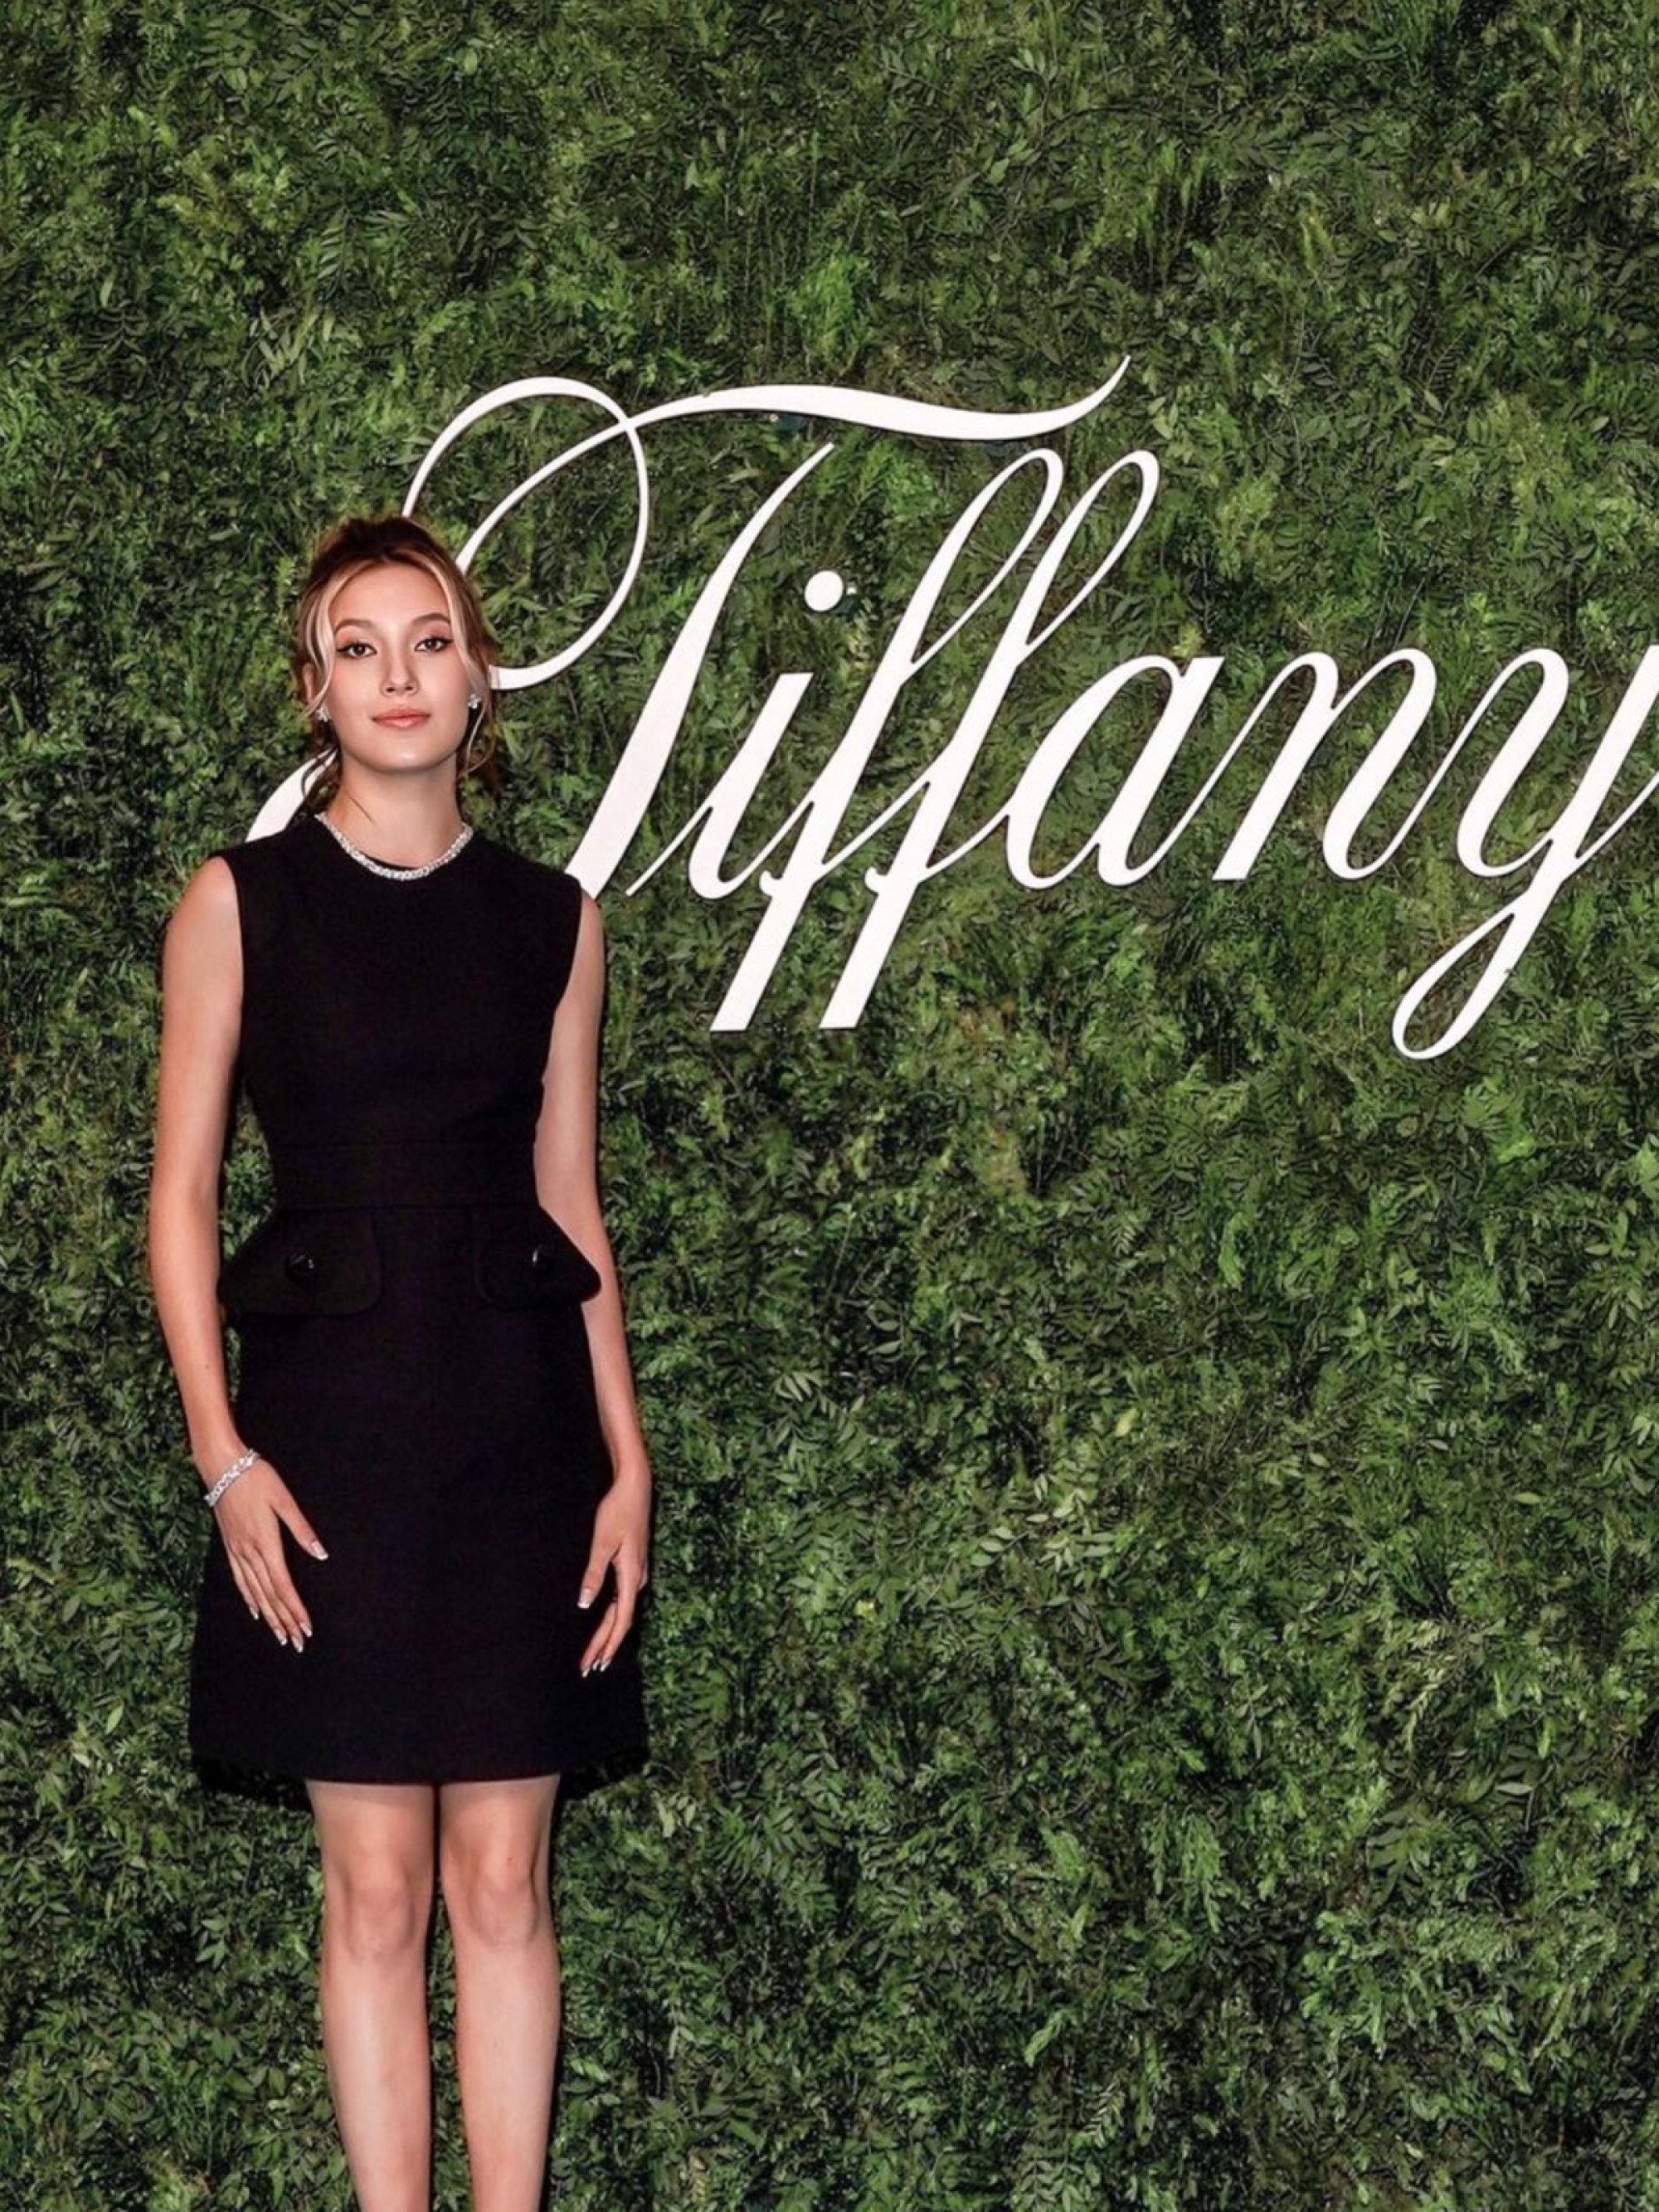 Eileen Gu wearing Tiffany & Co. at the 2021 Met Gala. - Tiffany